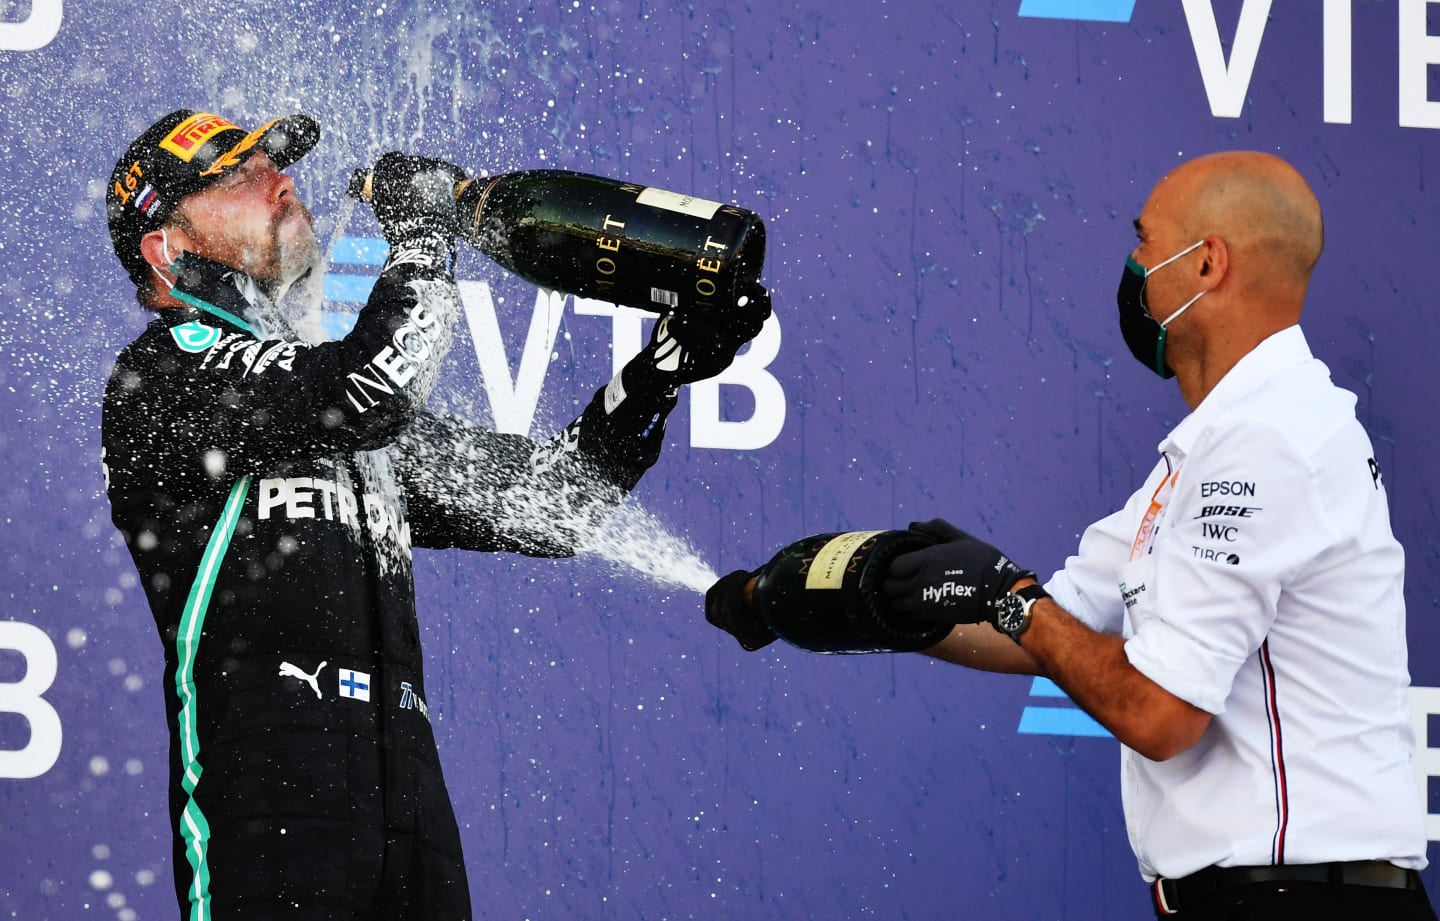 SOCHI, RUSSIA - SEPTEMBER 27: Race winner Valtteri Bottas of Finland and Mercedes GP celebrates on